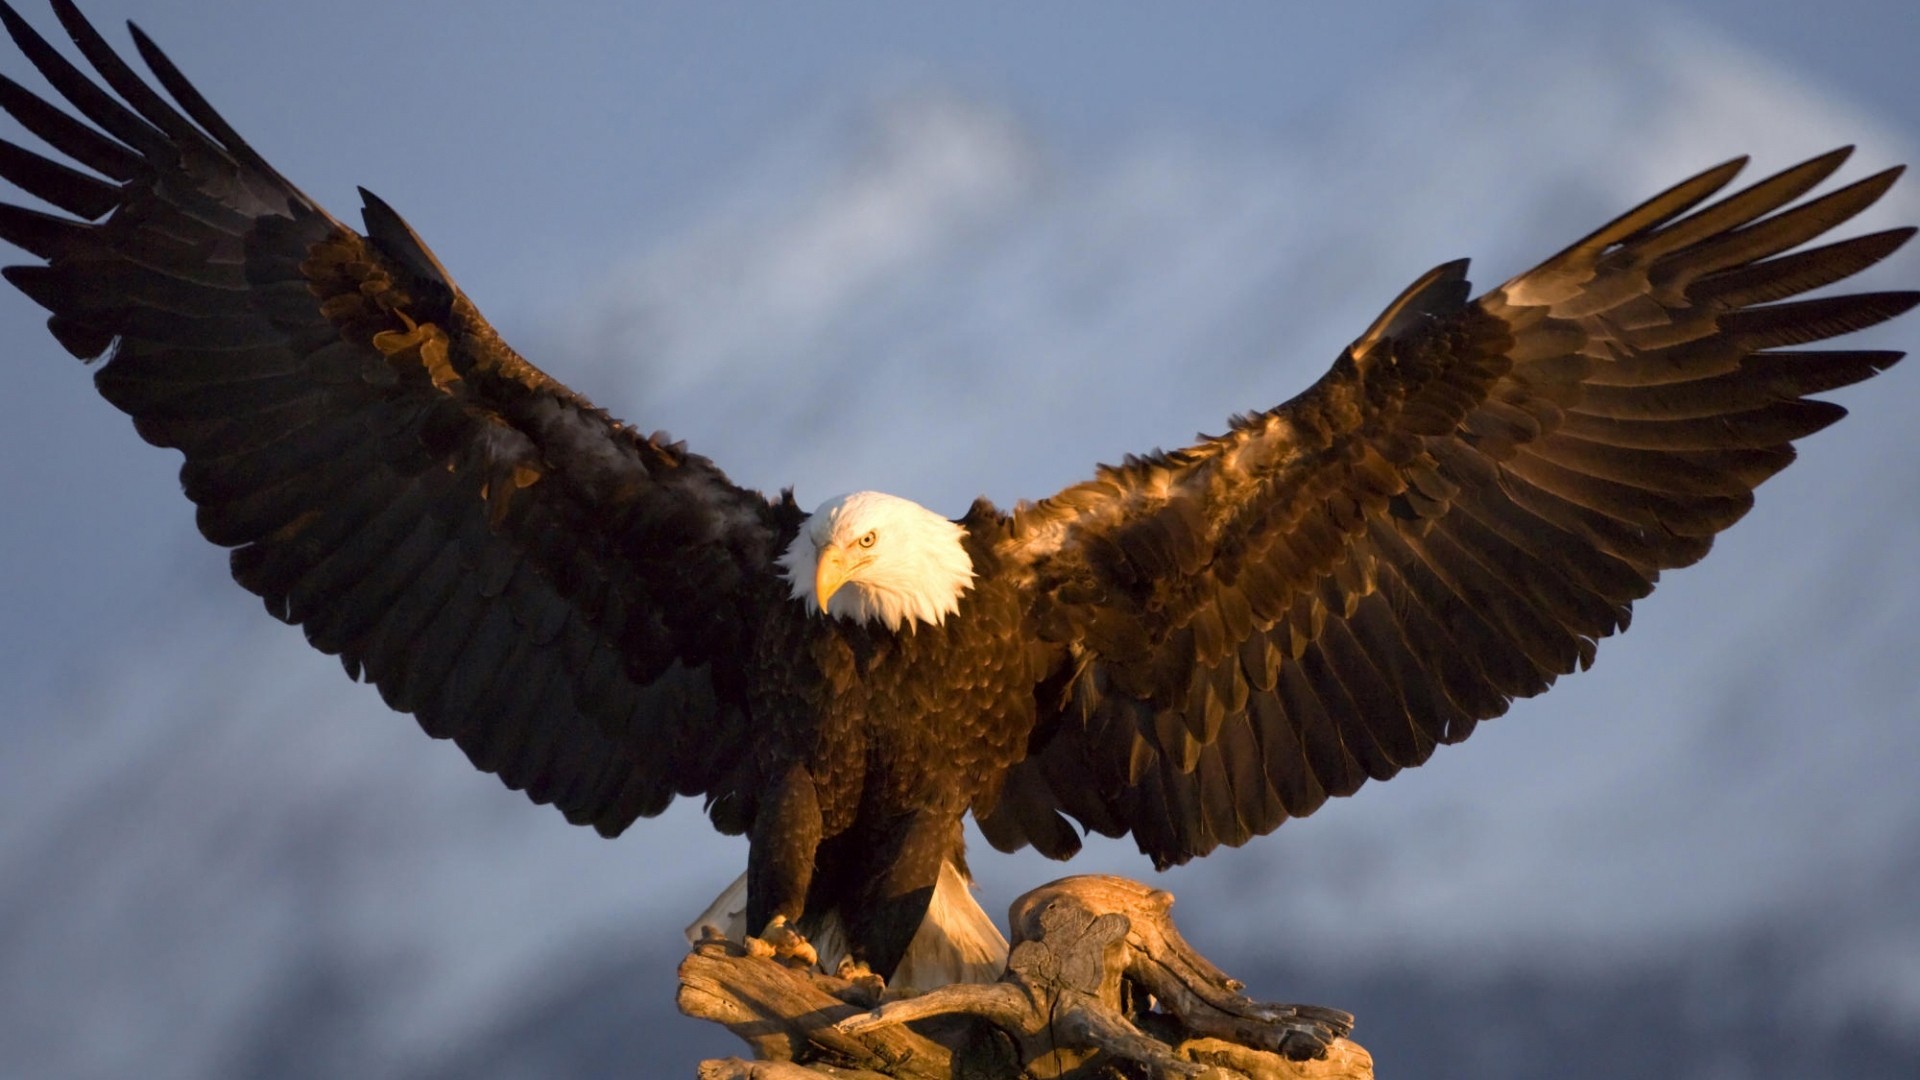 General 1920x1080 animals nature wildlife birds eagle bald eagle Freedom Glider